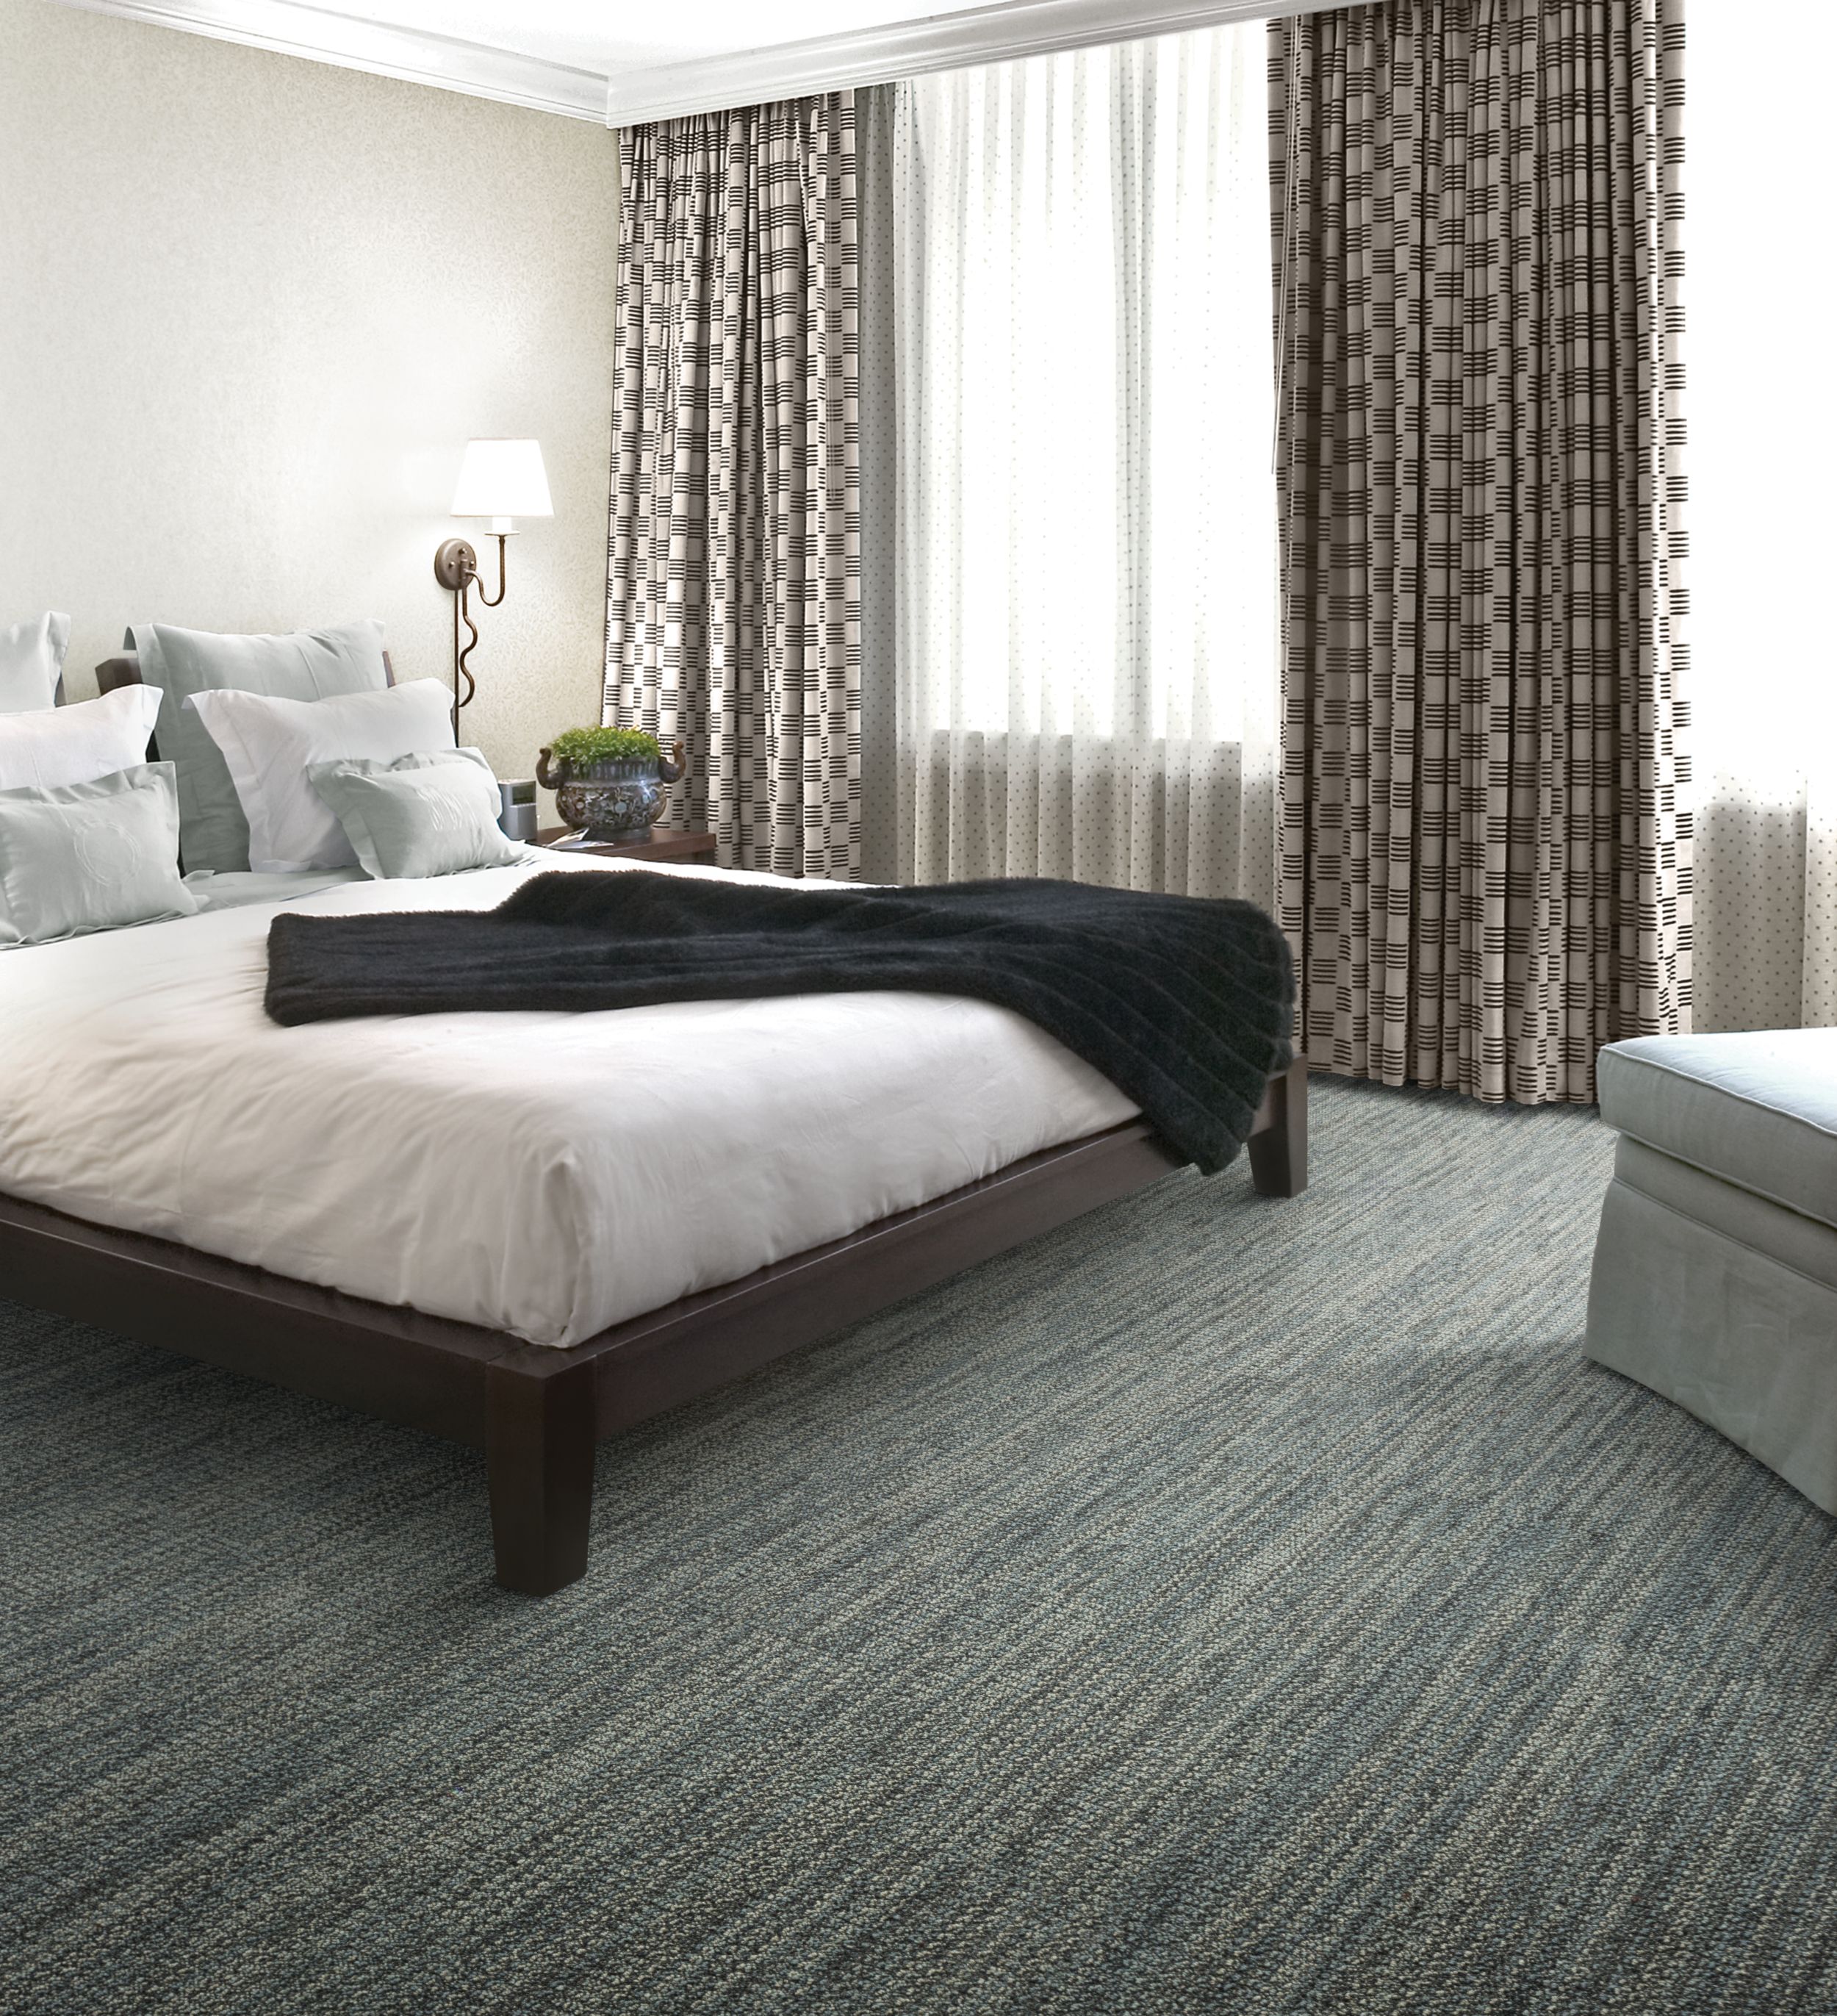 Interface Afternoon Light carpet tile in hotel guest room imagen número 6